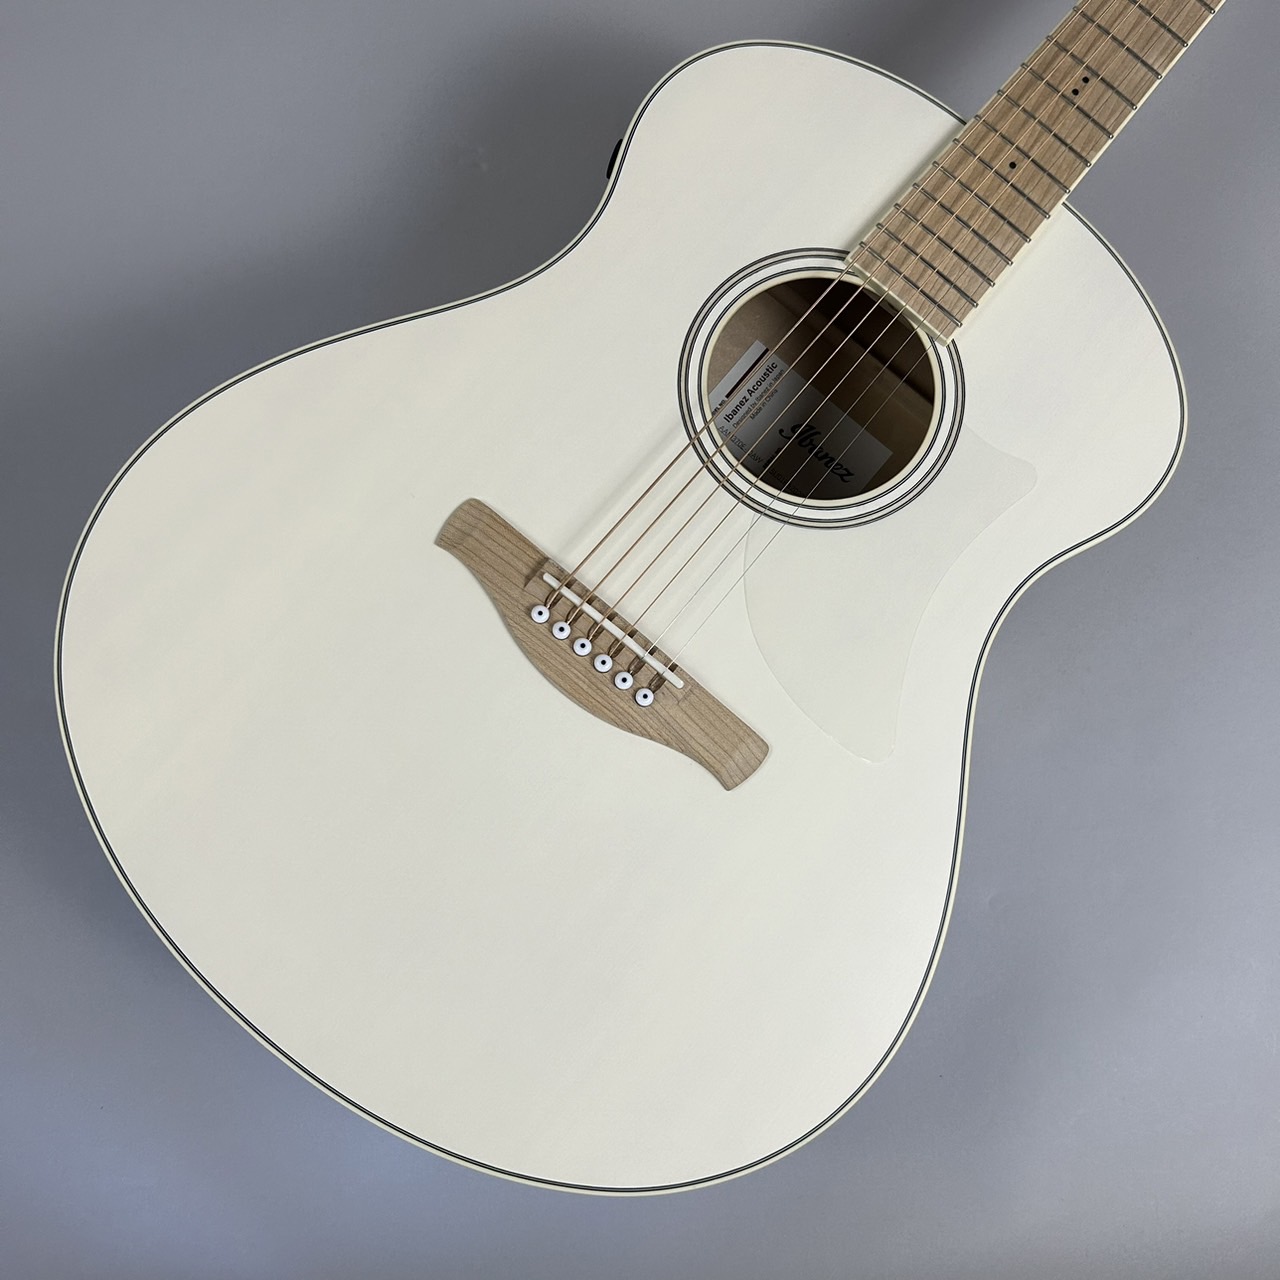 Ibanez AAM370E OAW エレアコギター オープンポアアンティークホワイト オーディトリアム アイバニーズ 【 エミフルＭＡＳＡＫＩ店 】  | 島村楽器オンラインストア